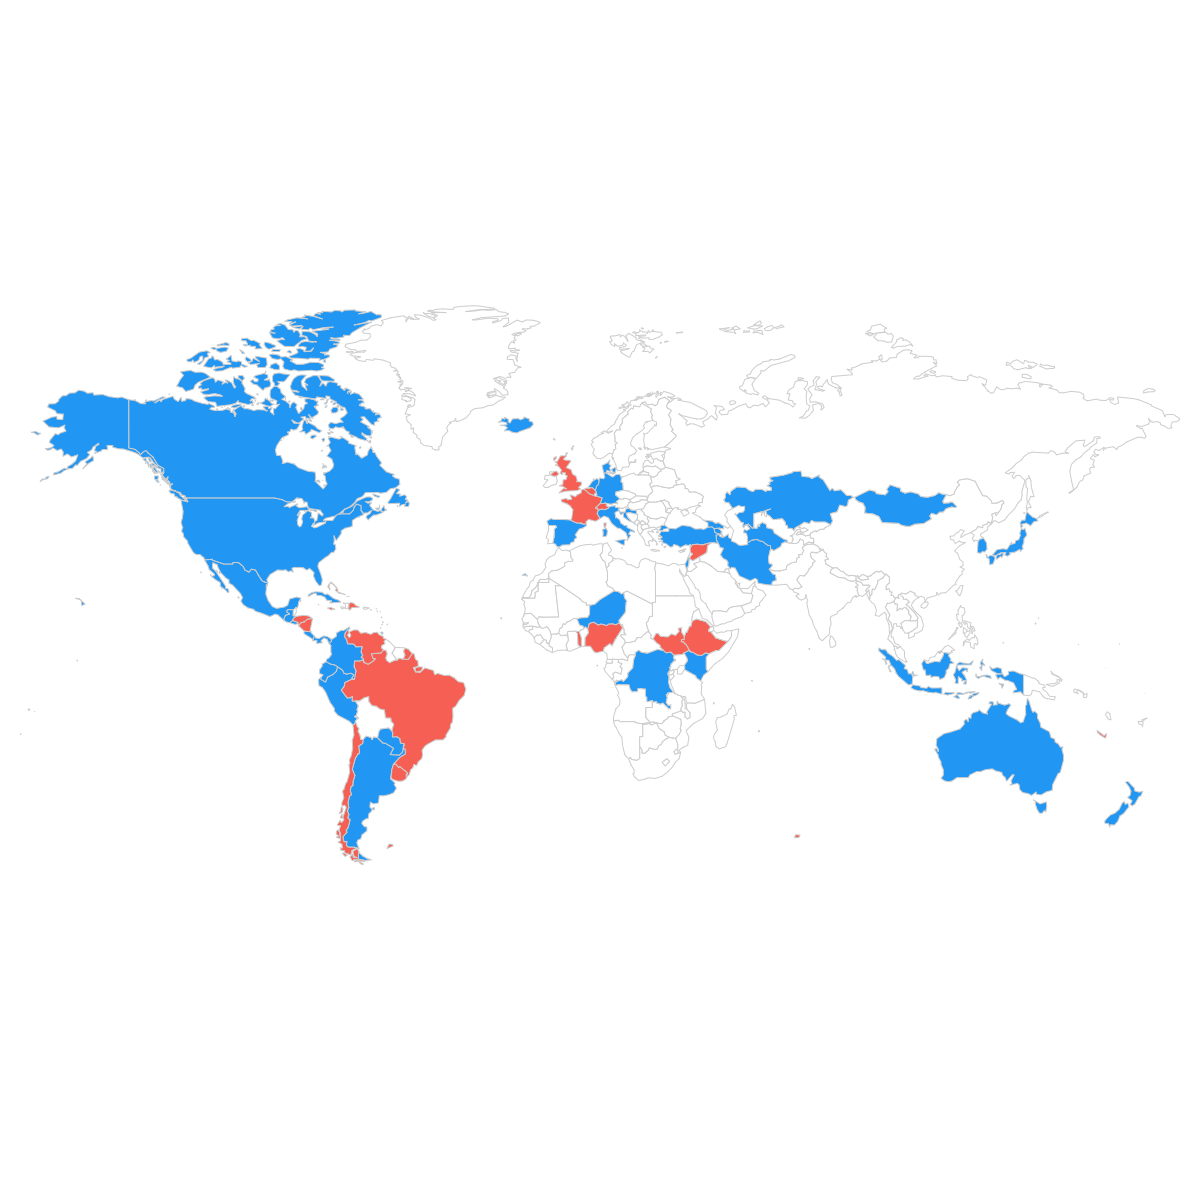 ApruebenLaLeyBasesYA Vs #NoALasFacultadesDelegadas por paises hasta las 20 horas.